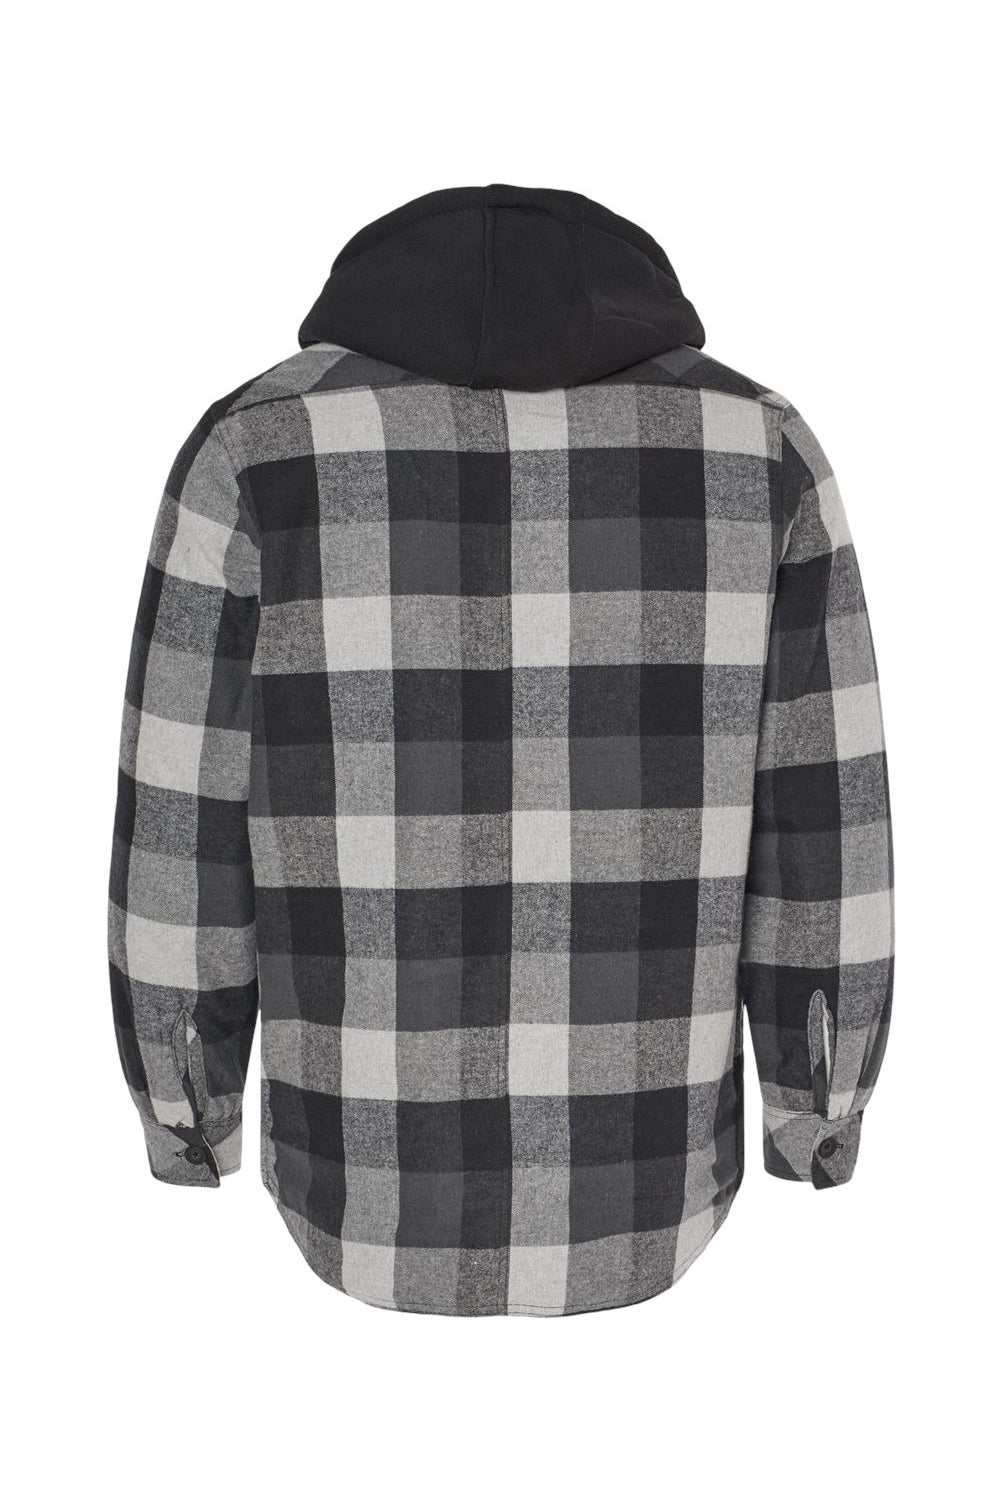 Burnside 8620 Mens Quilted Flannel Full Zip Hooded Jacket Black/Grey Flat Back